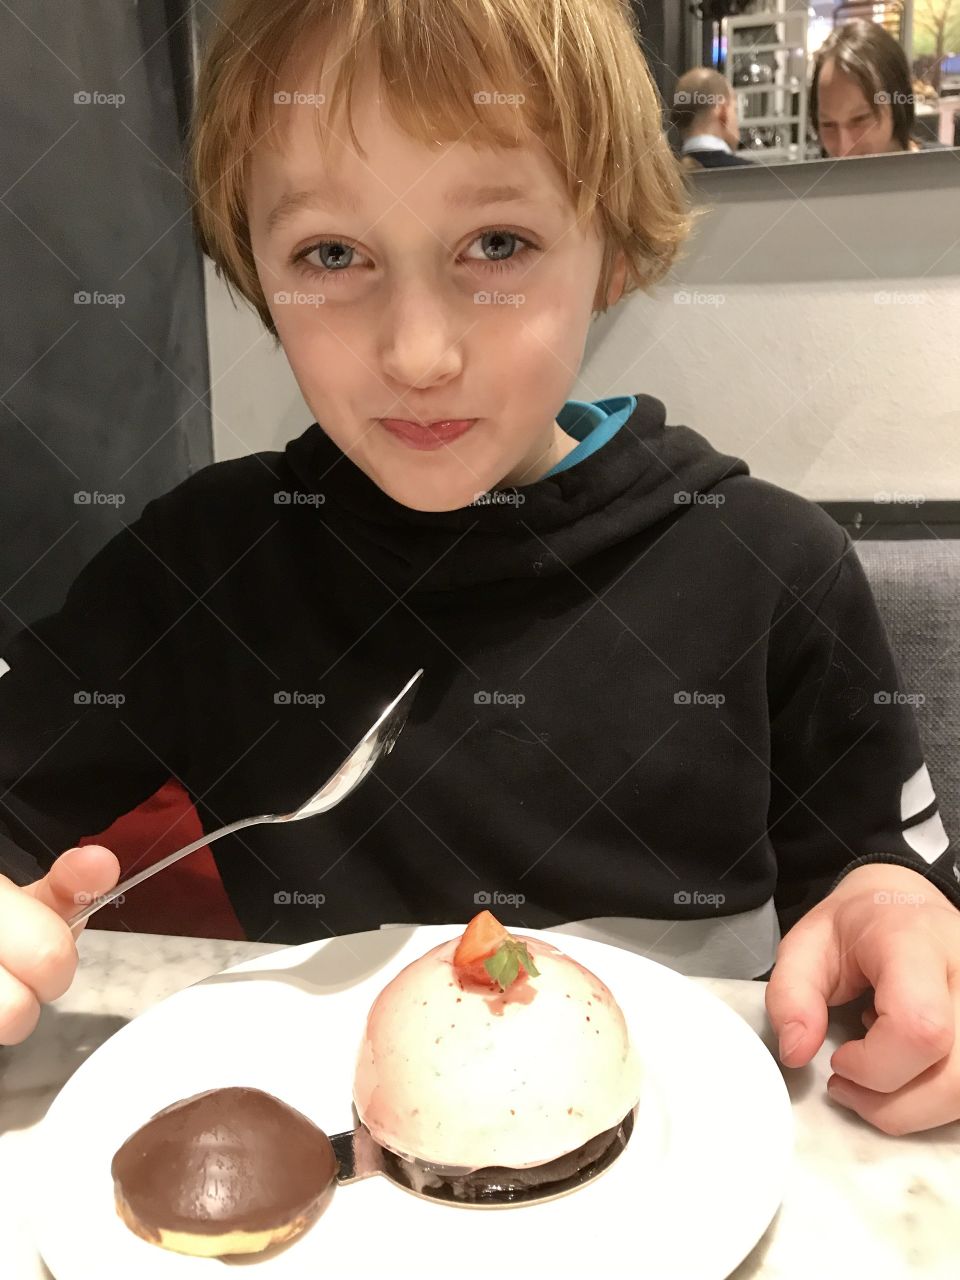 Child enjoying dessert